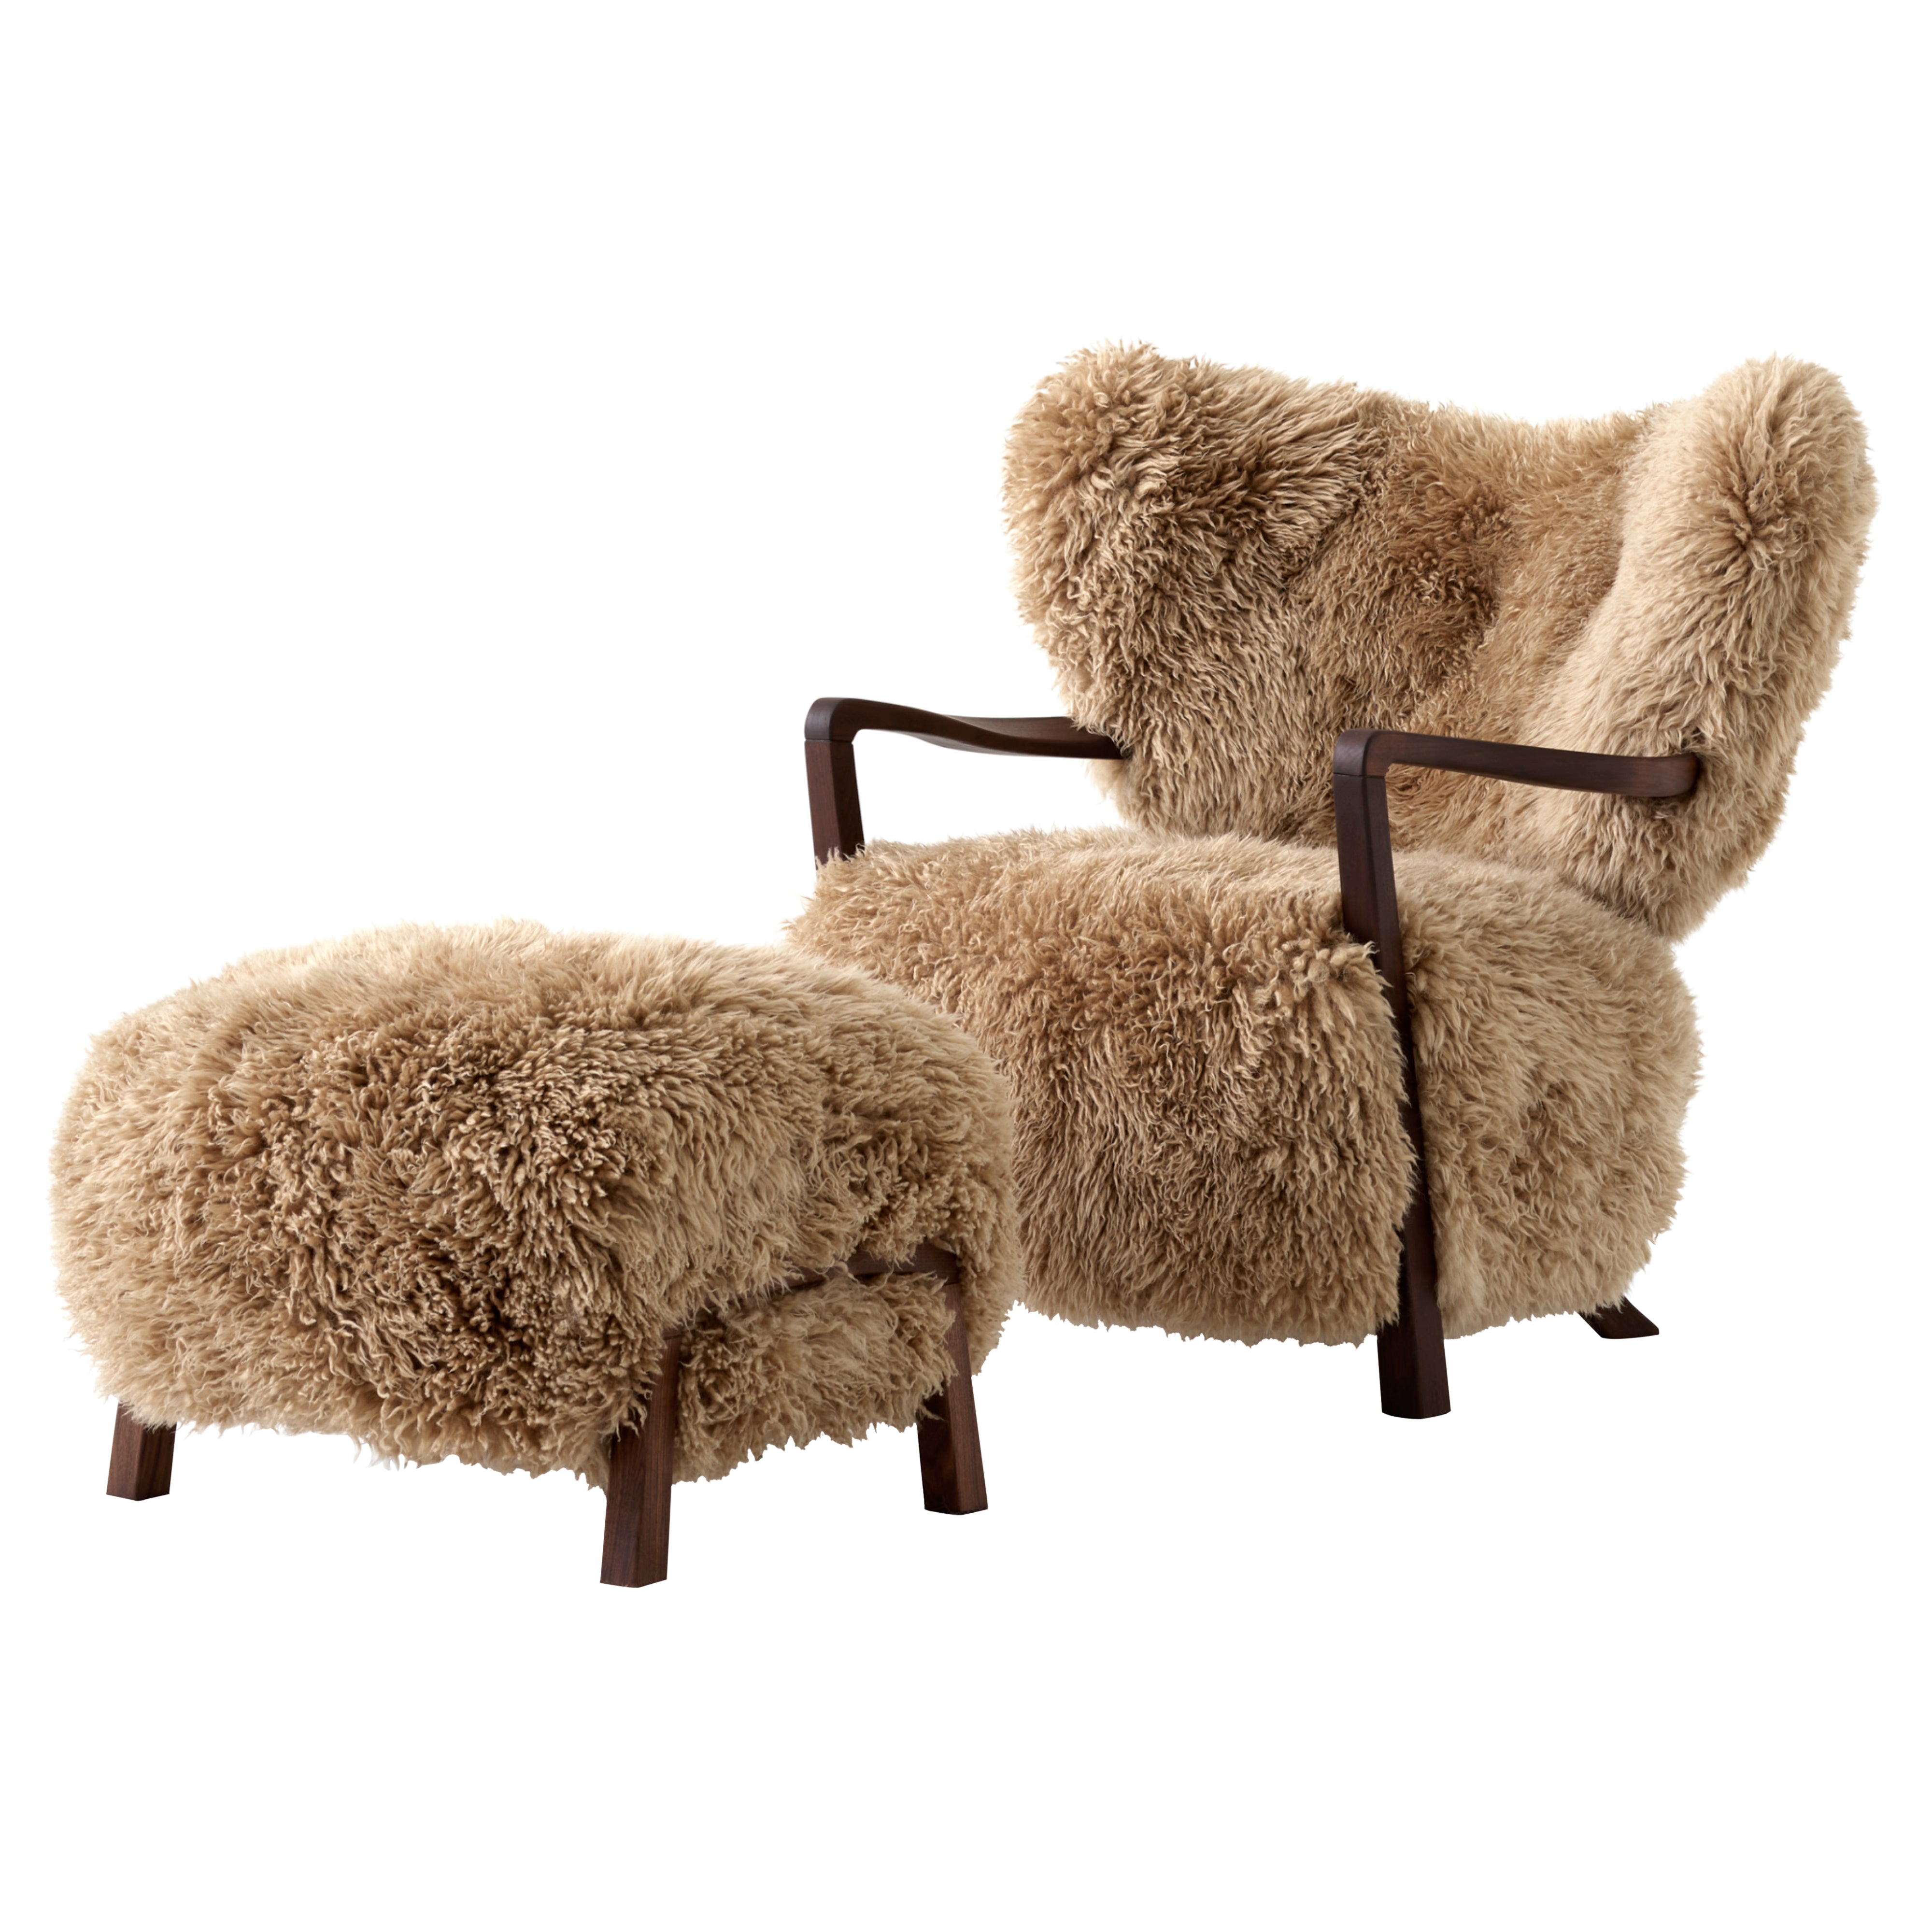 Wulff Lounge Chair ATD2 + Pouf ATD3: Walnut + Sheepskin Honey